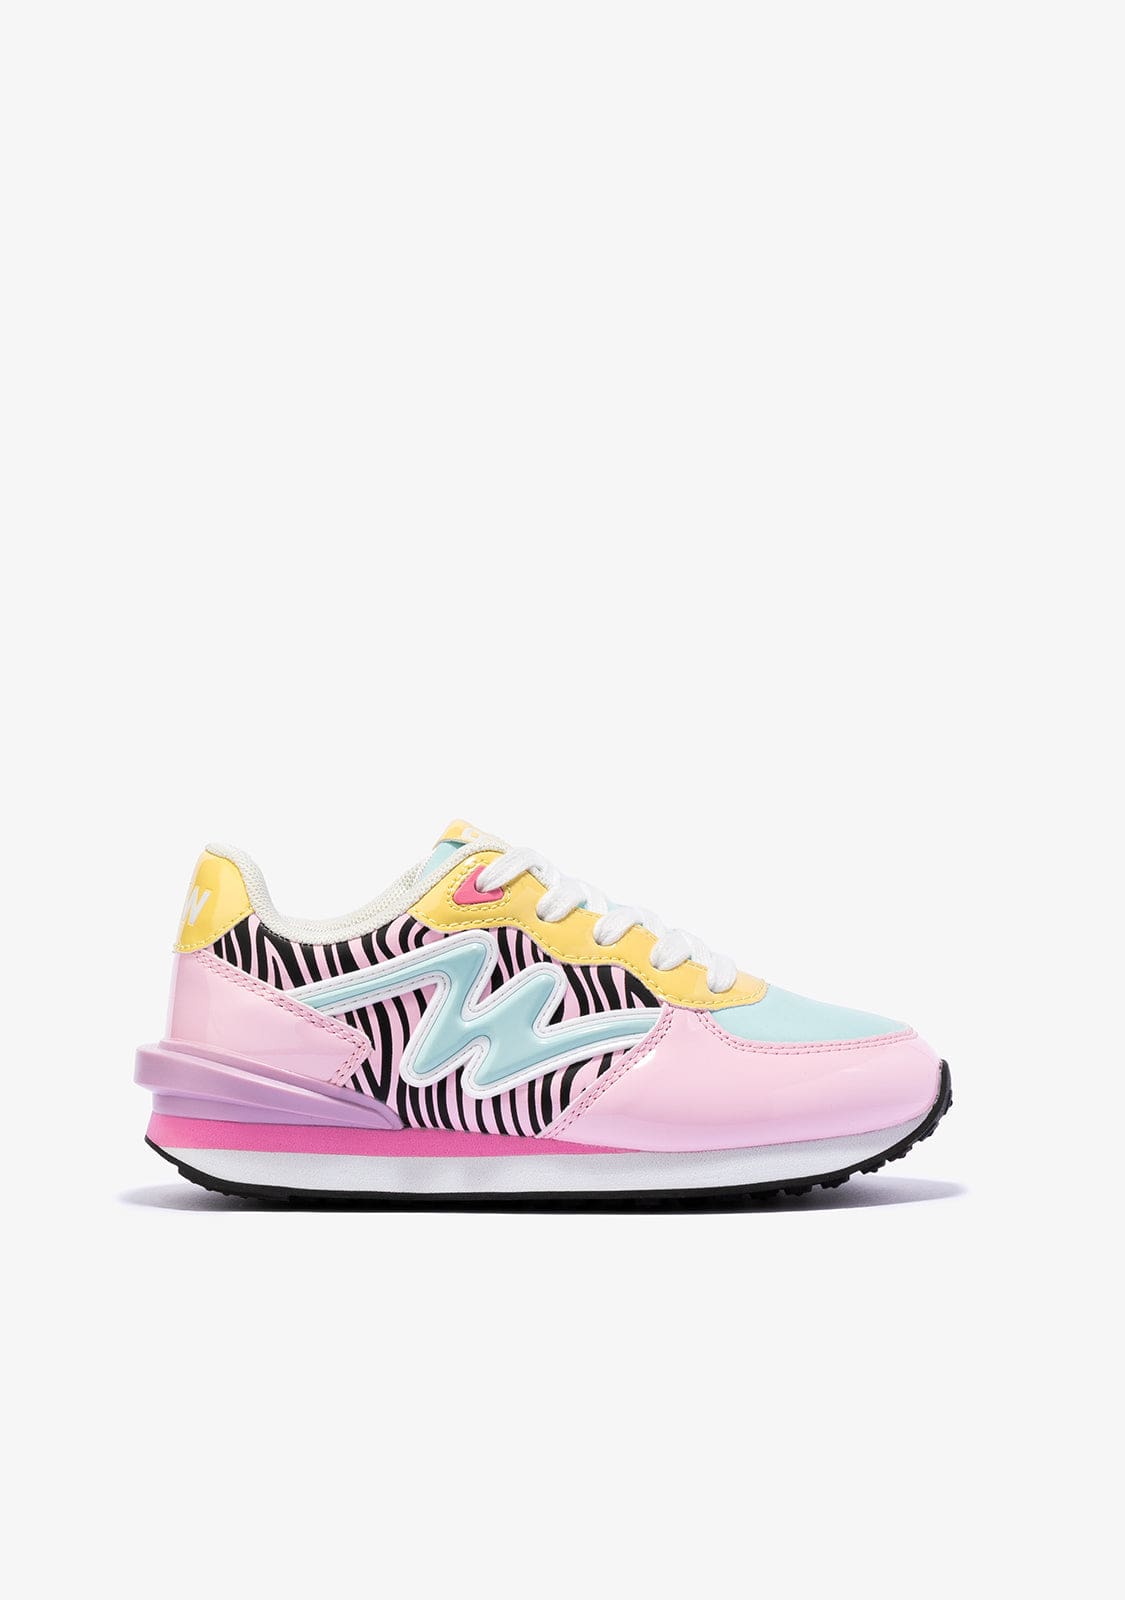 B&W JUNIOR Shoes Girl's Zebra Multicolour Sneakers B&W